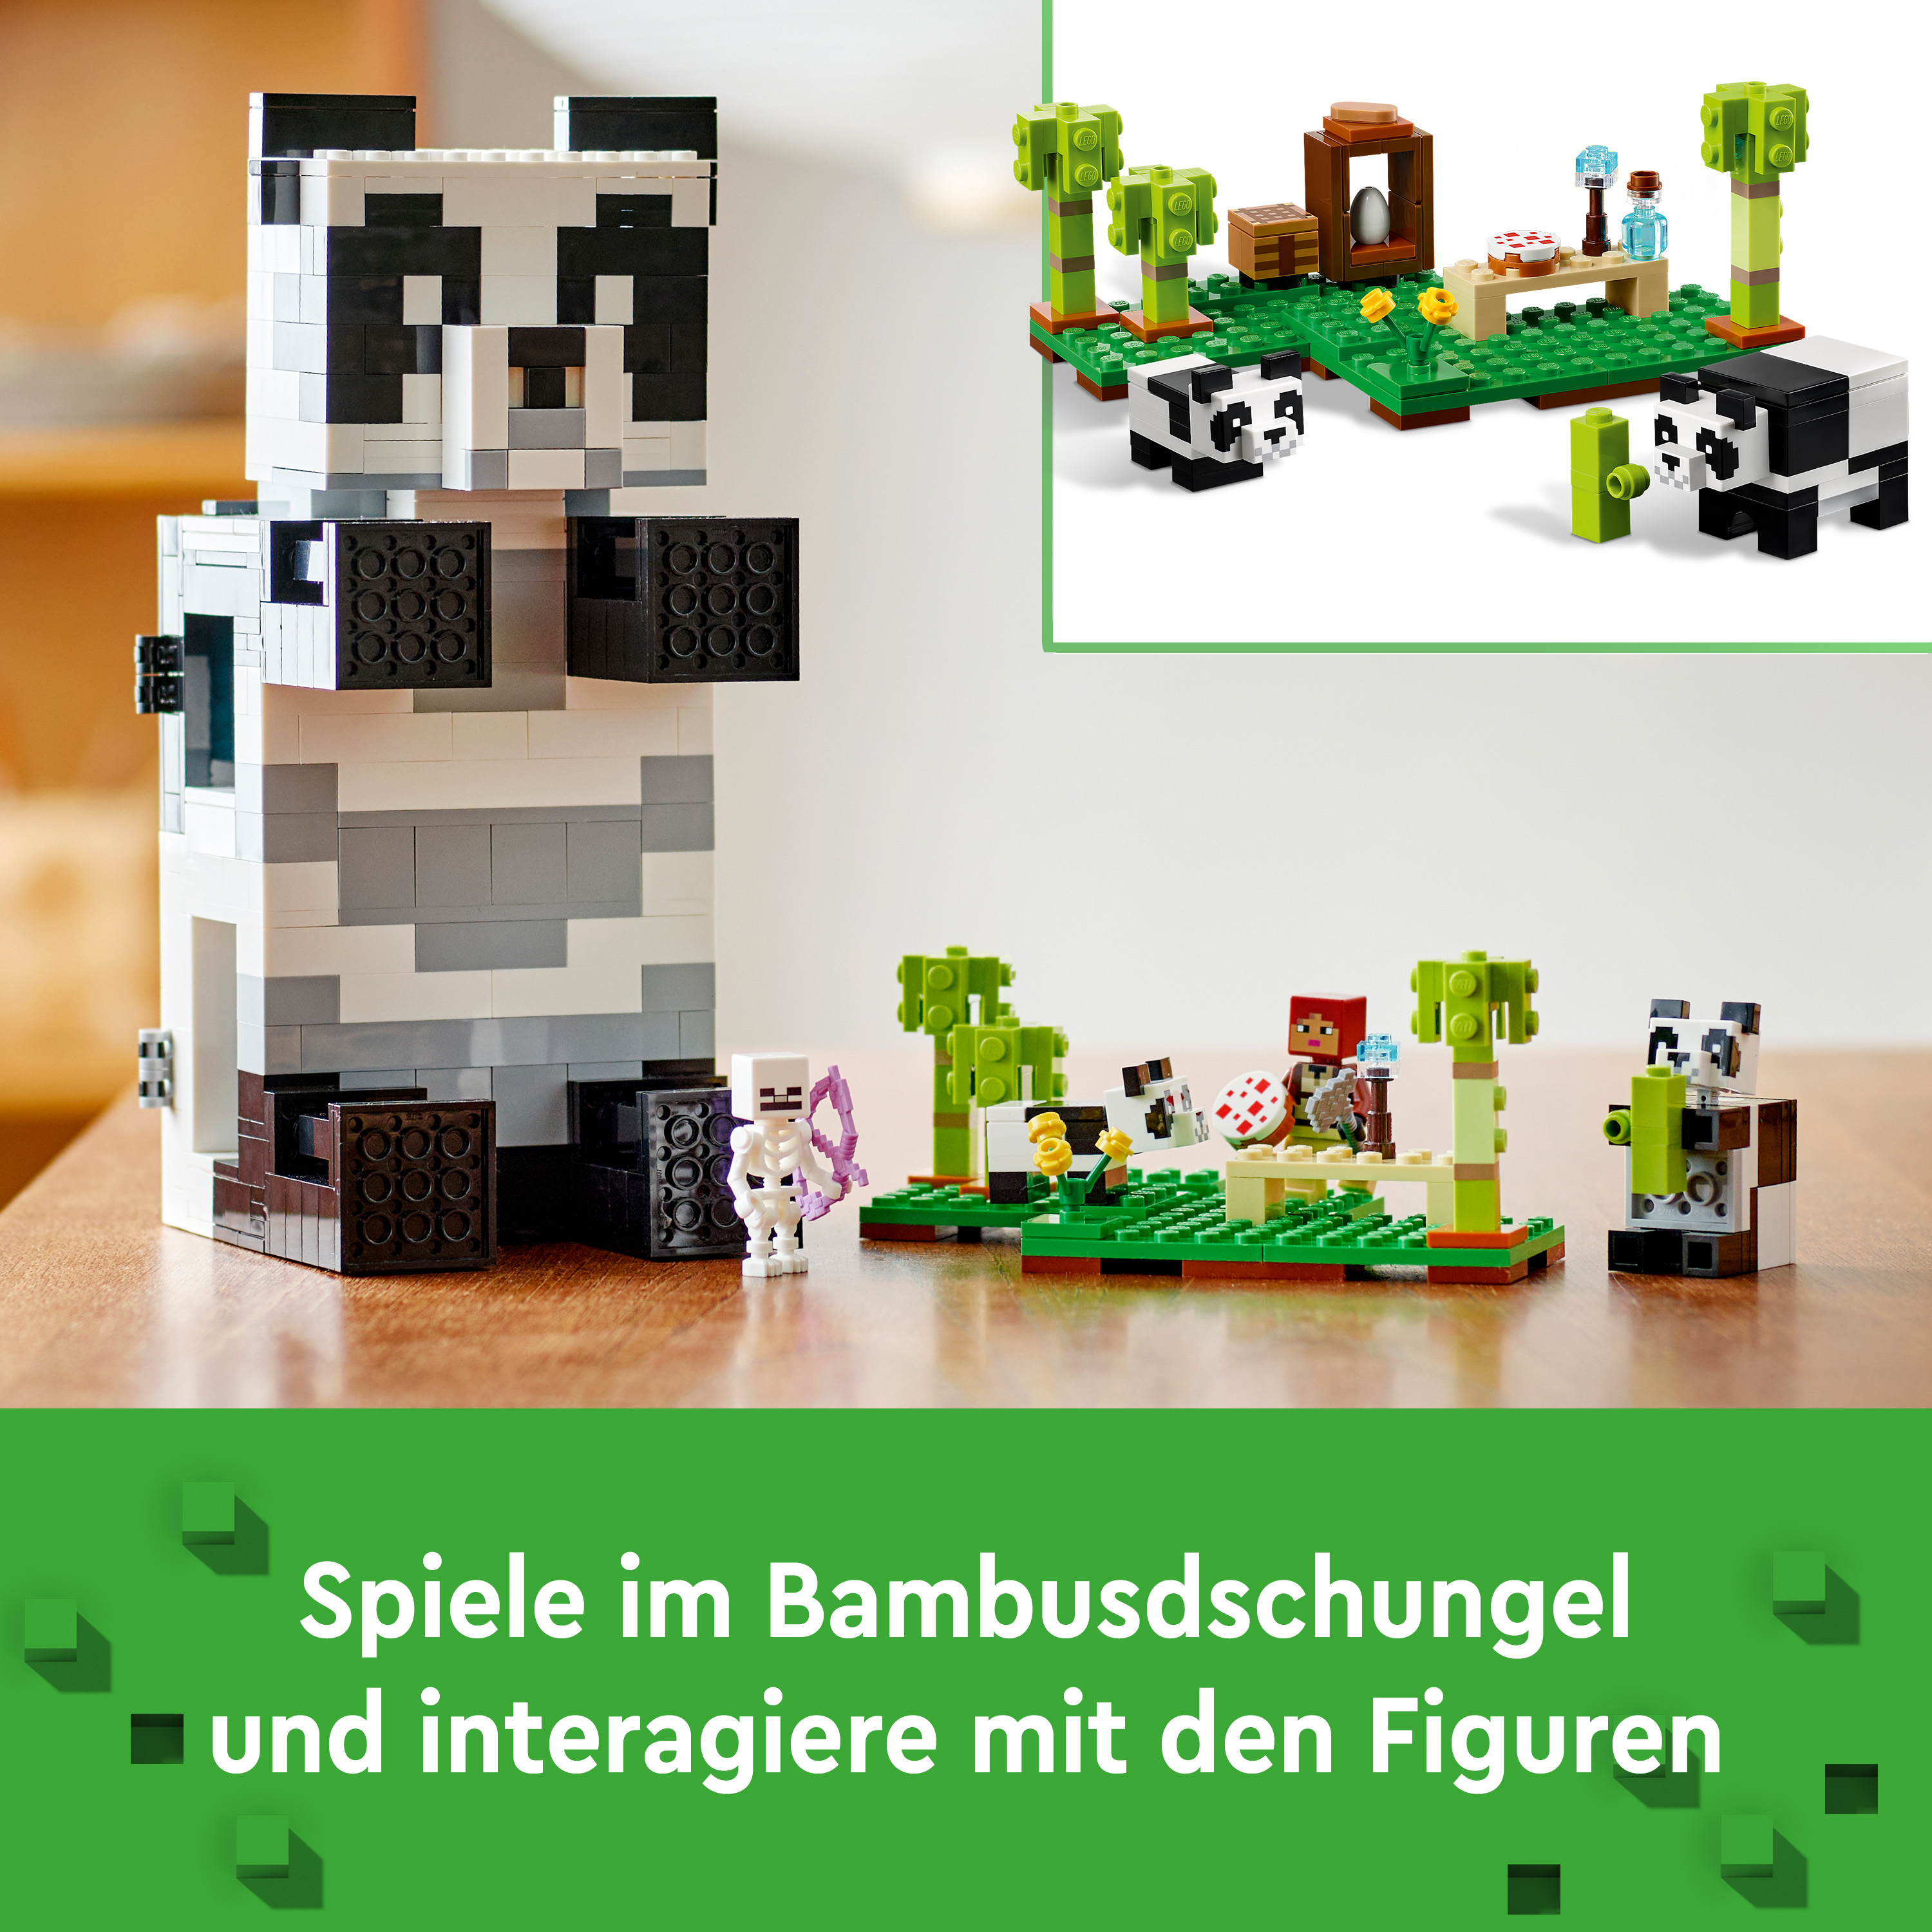 LEGO Bausatz, Das Minecraft Pandahaus Mehrfarbig 21245